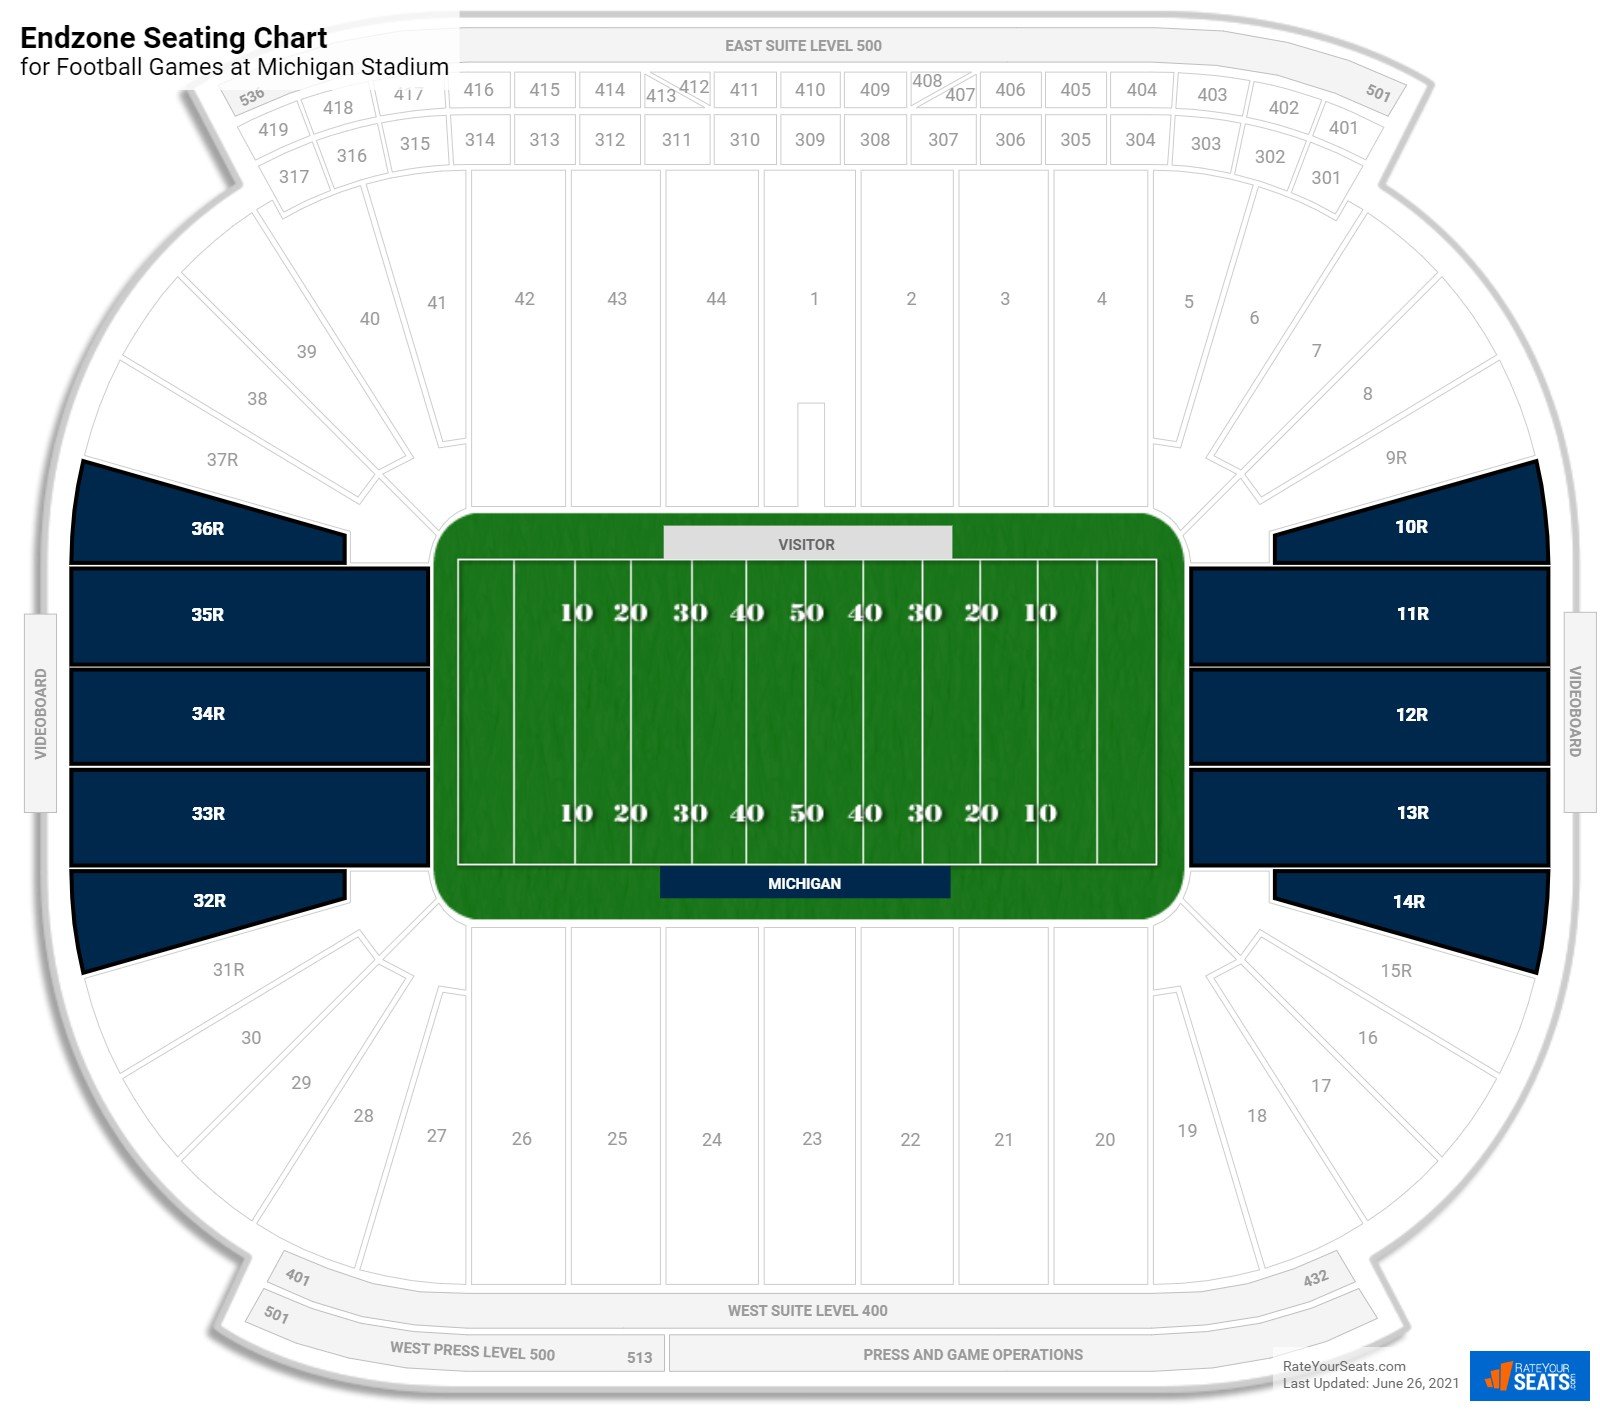 Football Endzone Seating Chart at Michigan Stadium